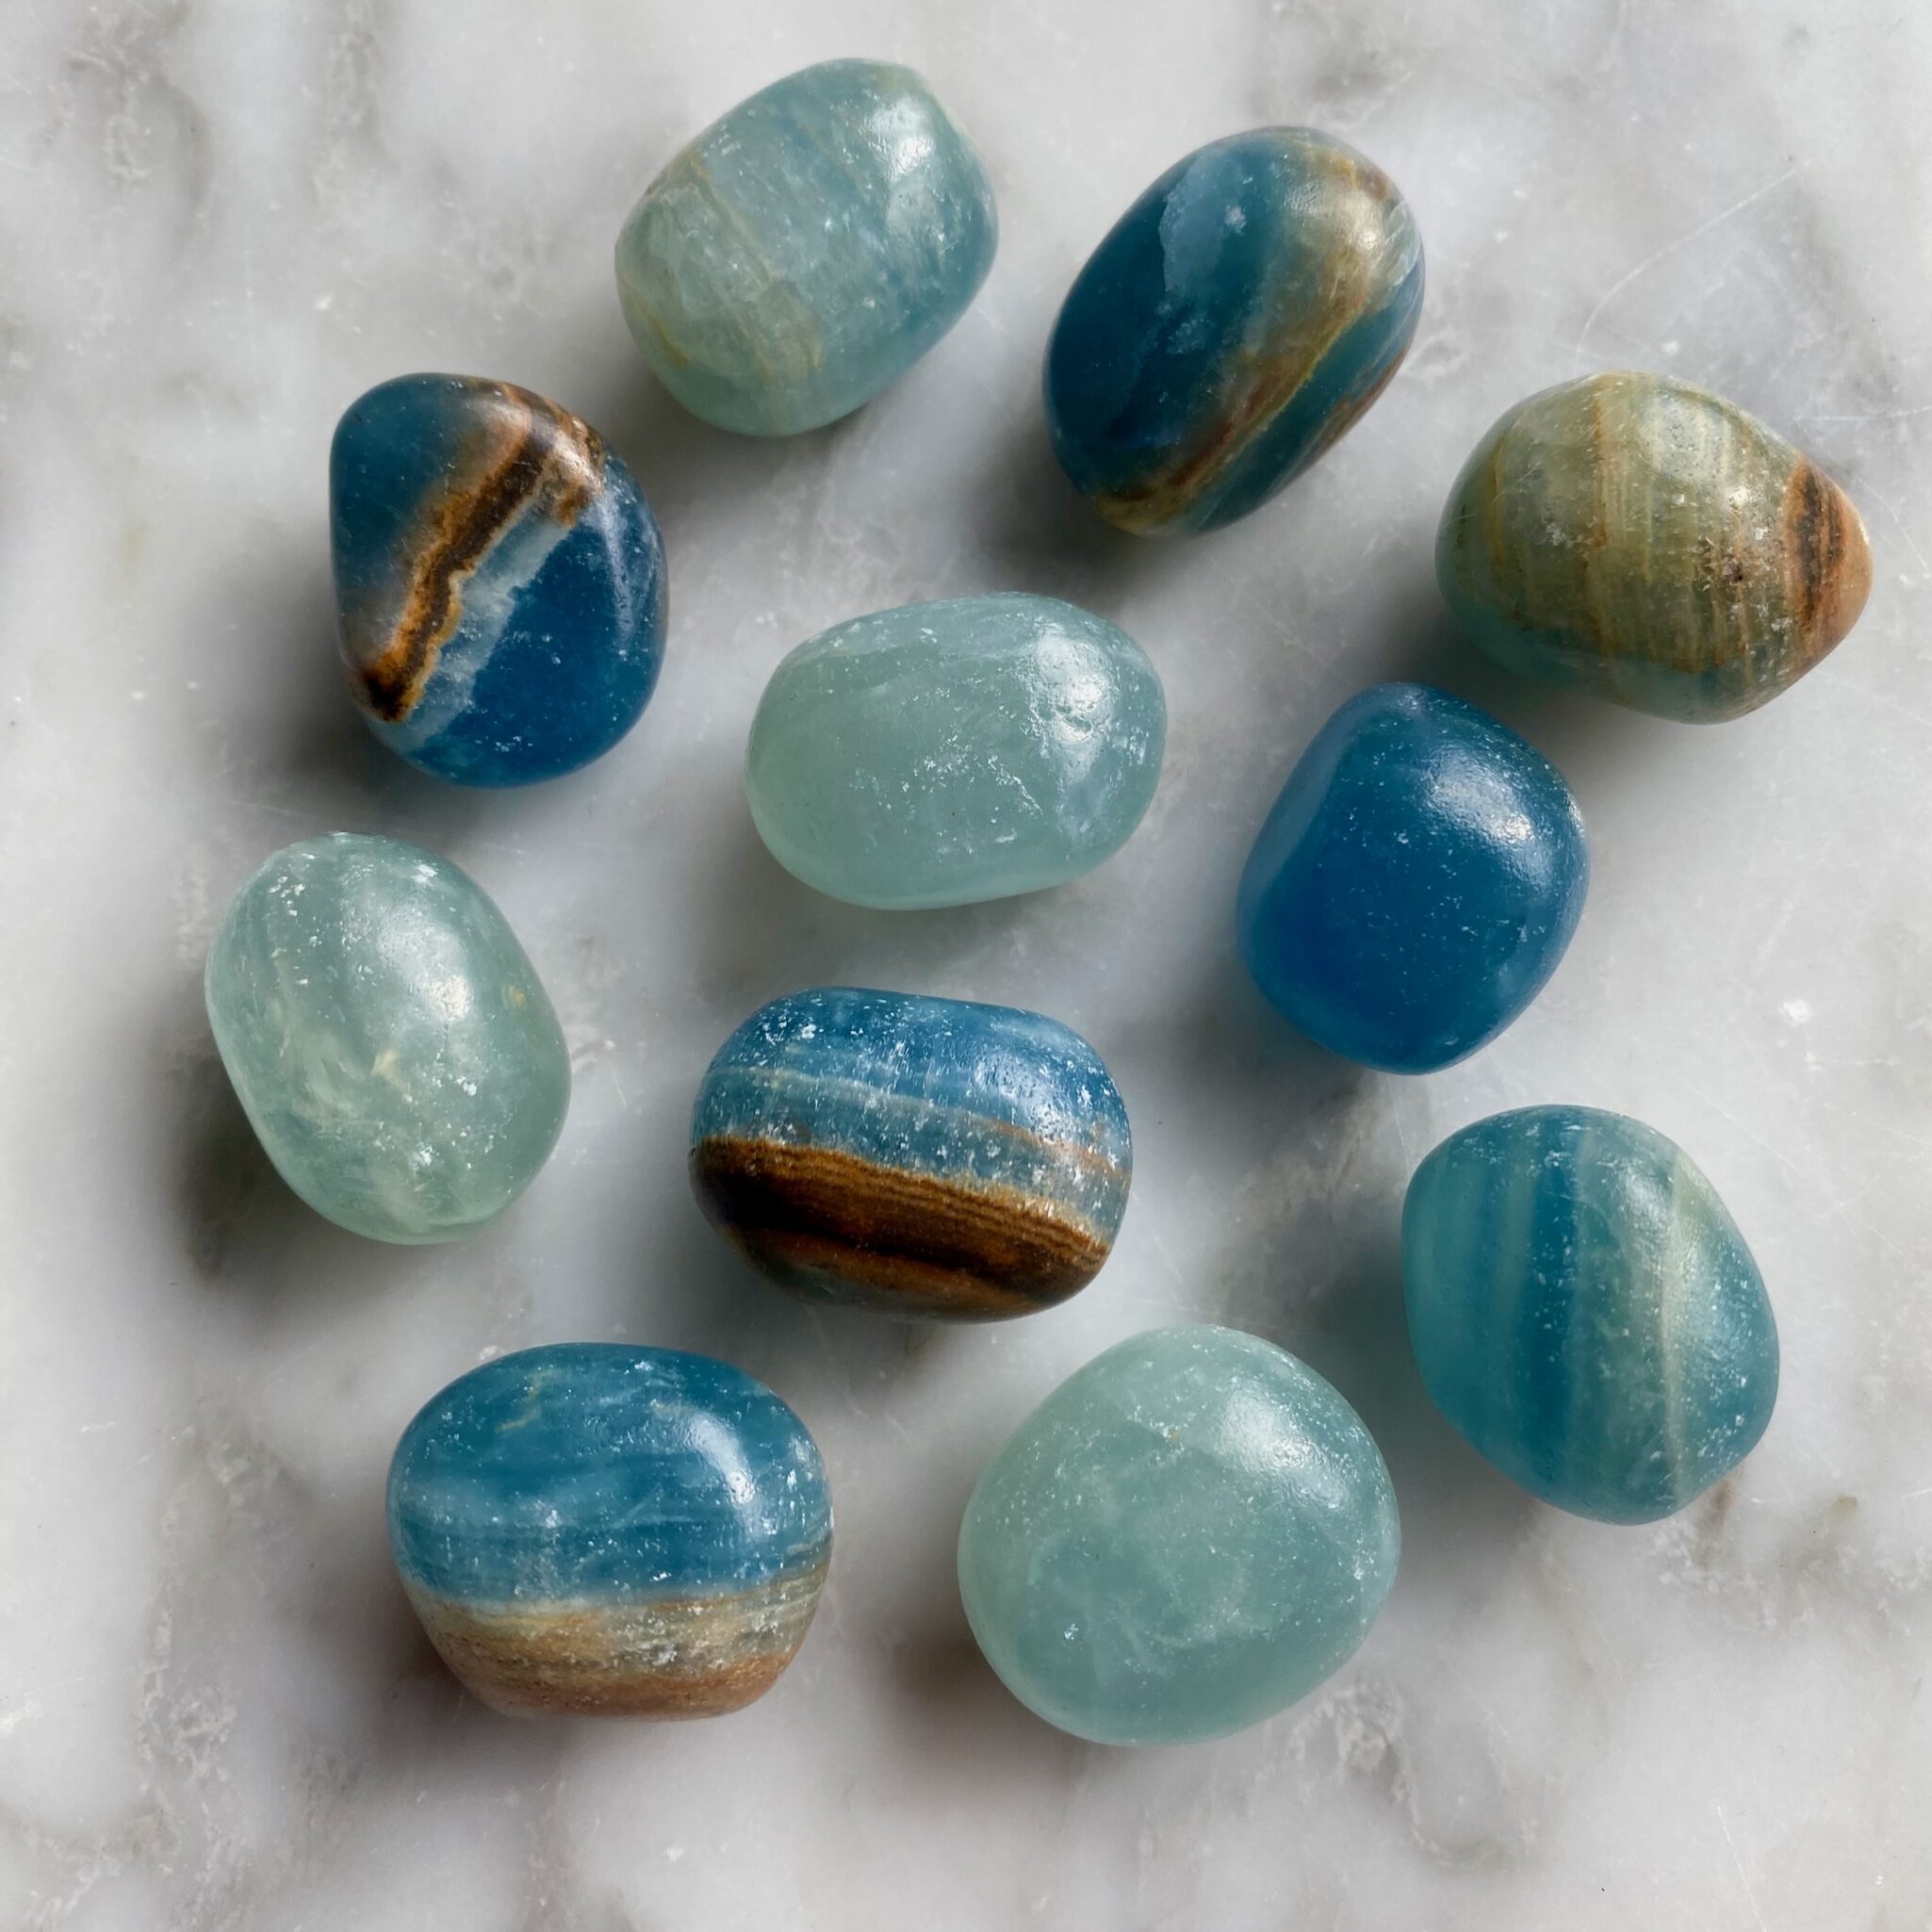 Blue Onyx Tumbled Pocket Stone - onyx bleue roulé pierre de poche